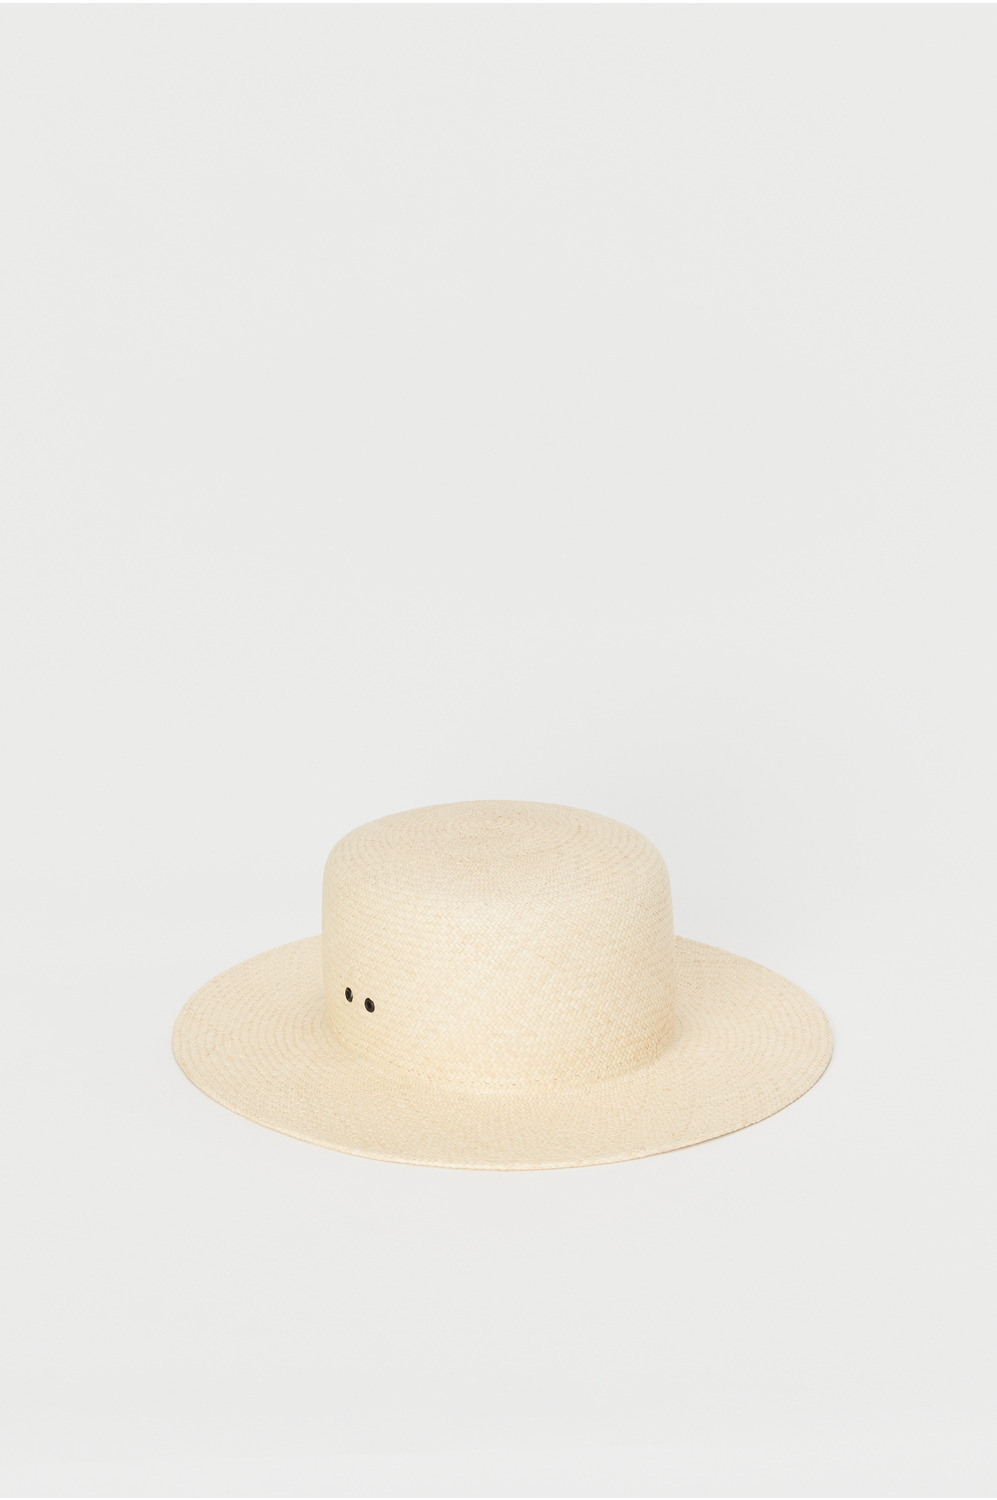 panama hat 詳細画像 natural 1